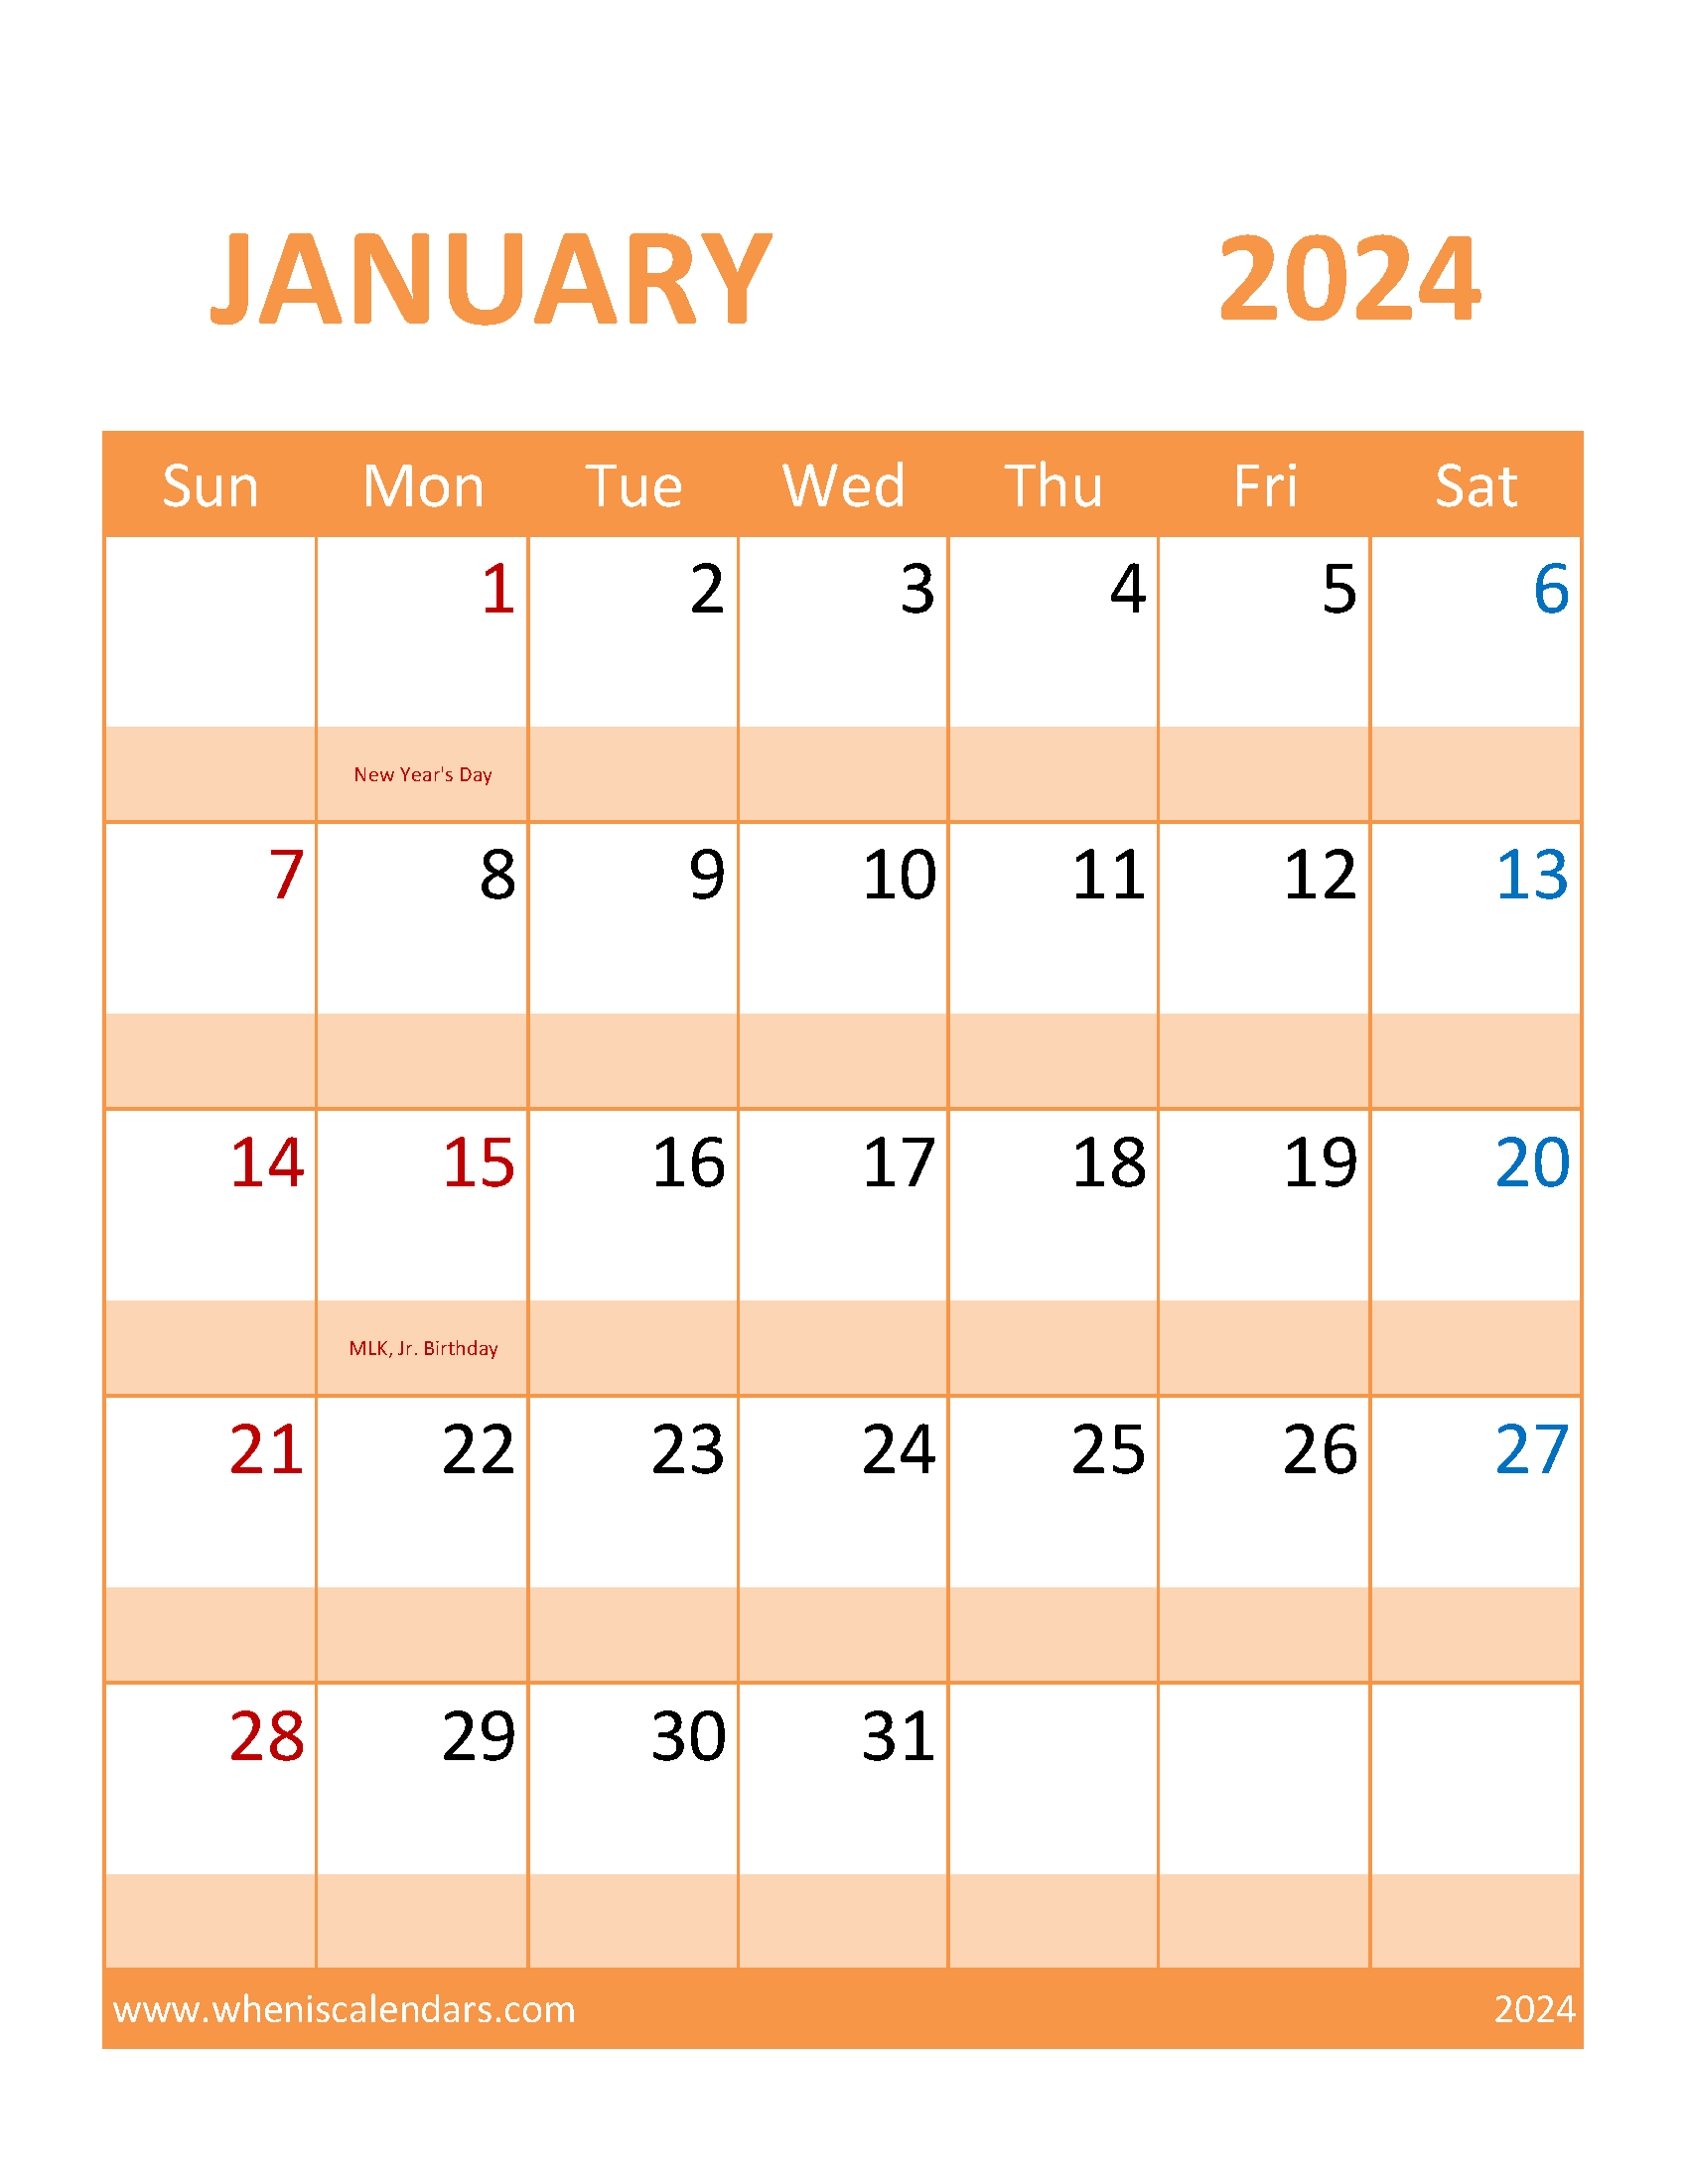 January 2024 work Calendar Monthly Calendar